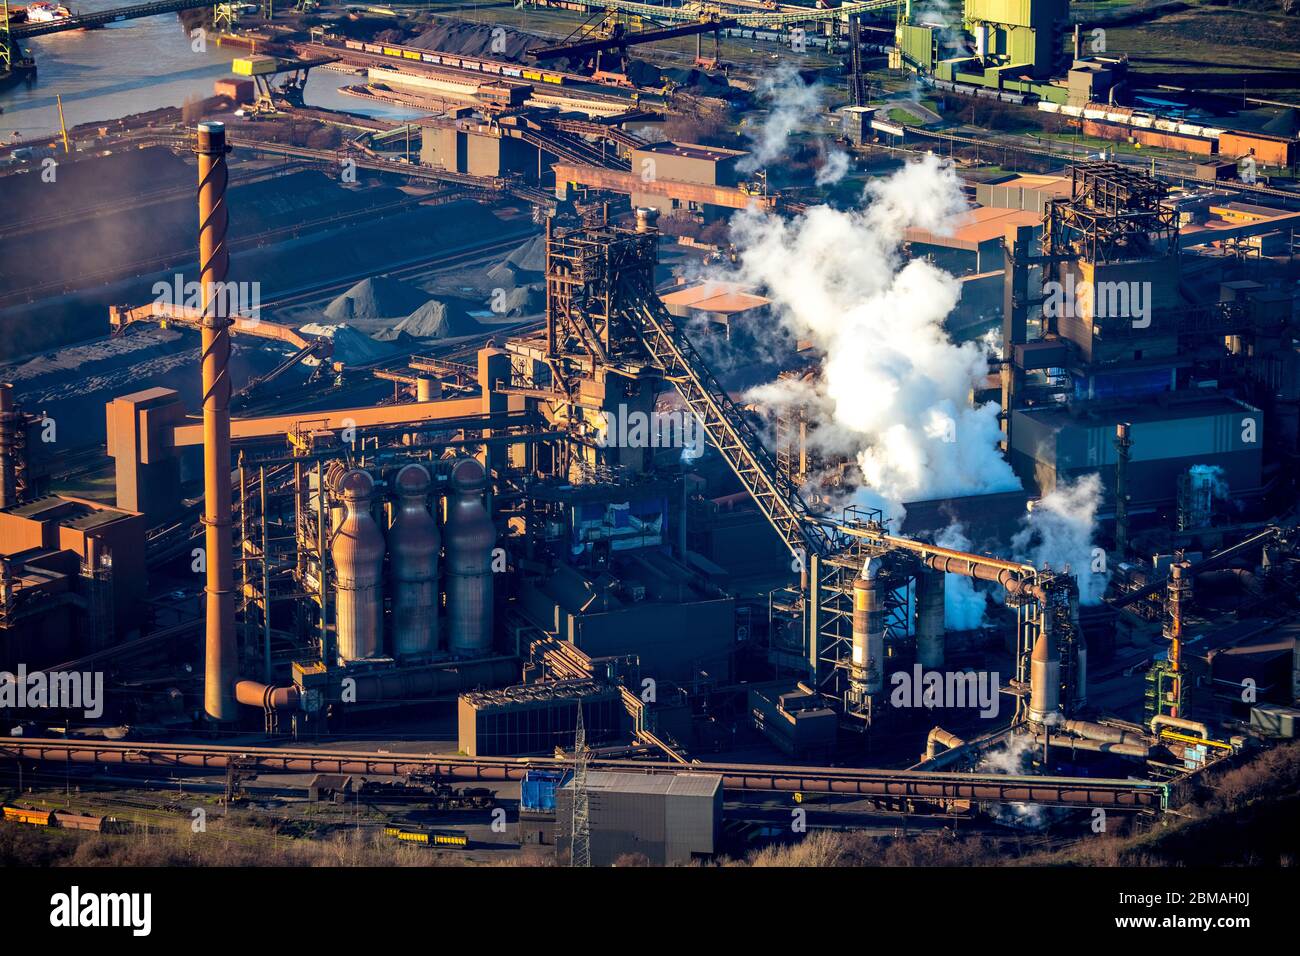 TKSE Hamborn blast furnace in Bruckhausen, 07.02.2020, aerial view, Germany, North Rhine-Westphalia, Ruhr Area, Duisburg Stock Photo